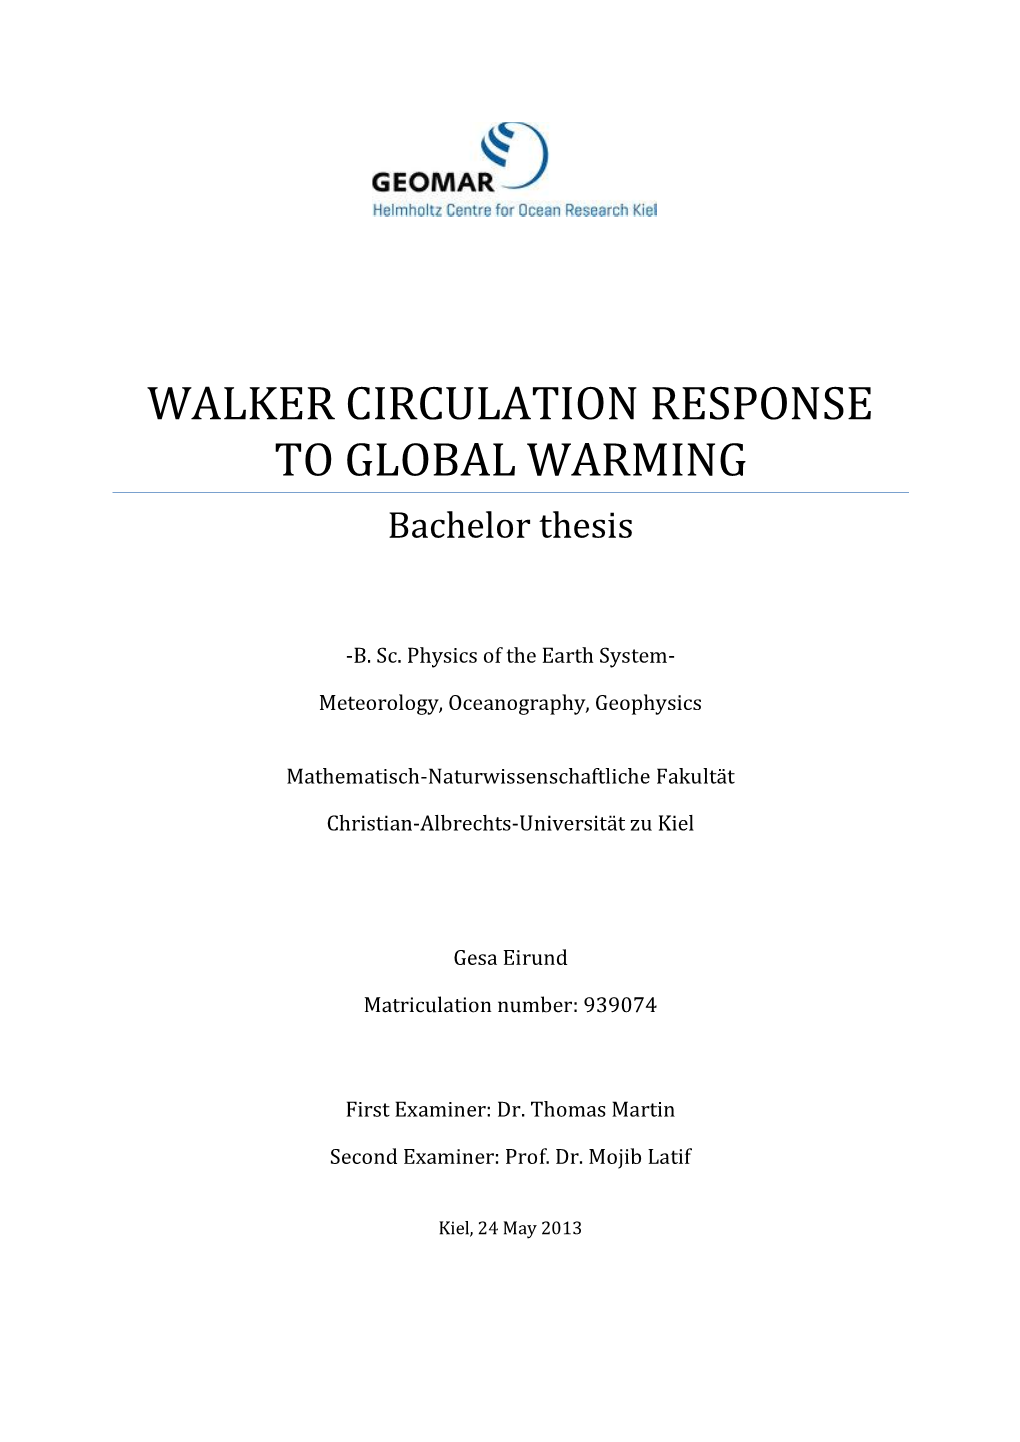 WALKER CIRCULATION RESPONSE to GLOBAL WARMING Bachelor Thesis